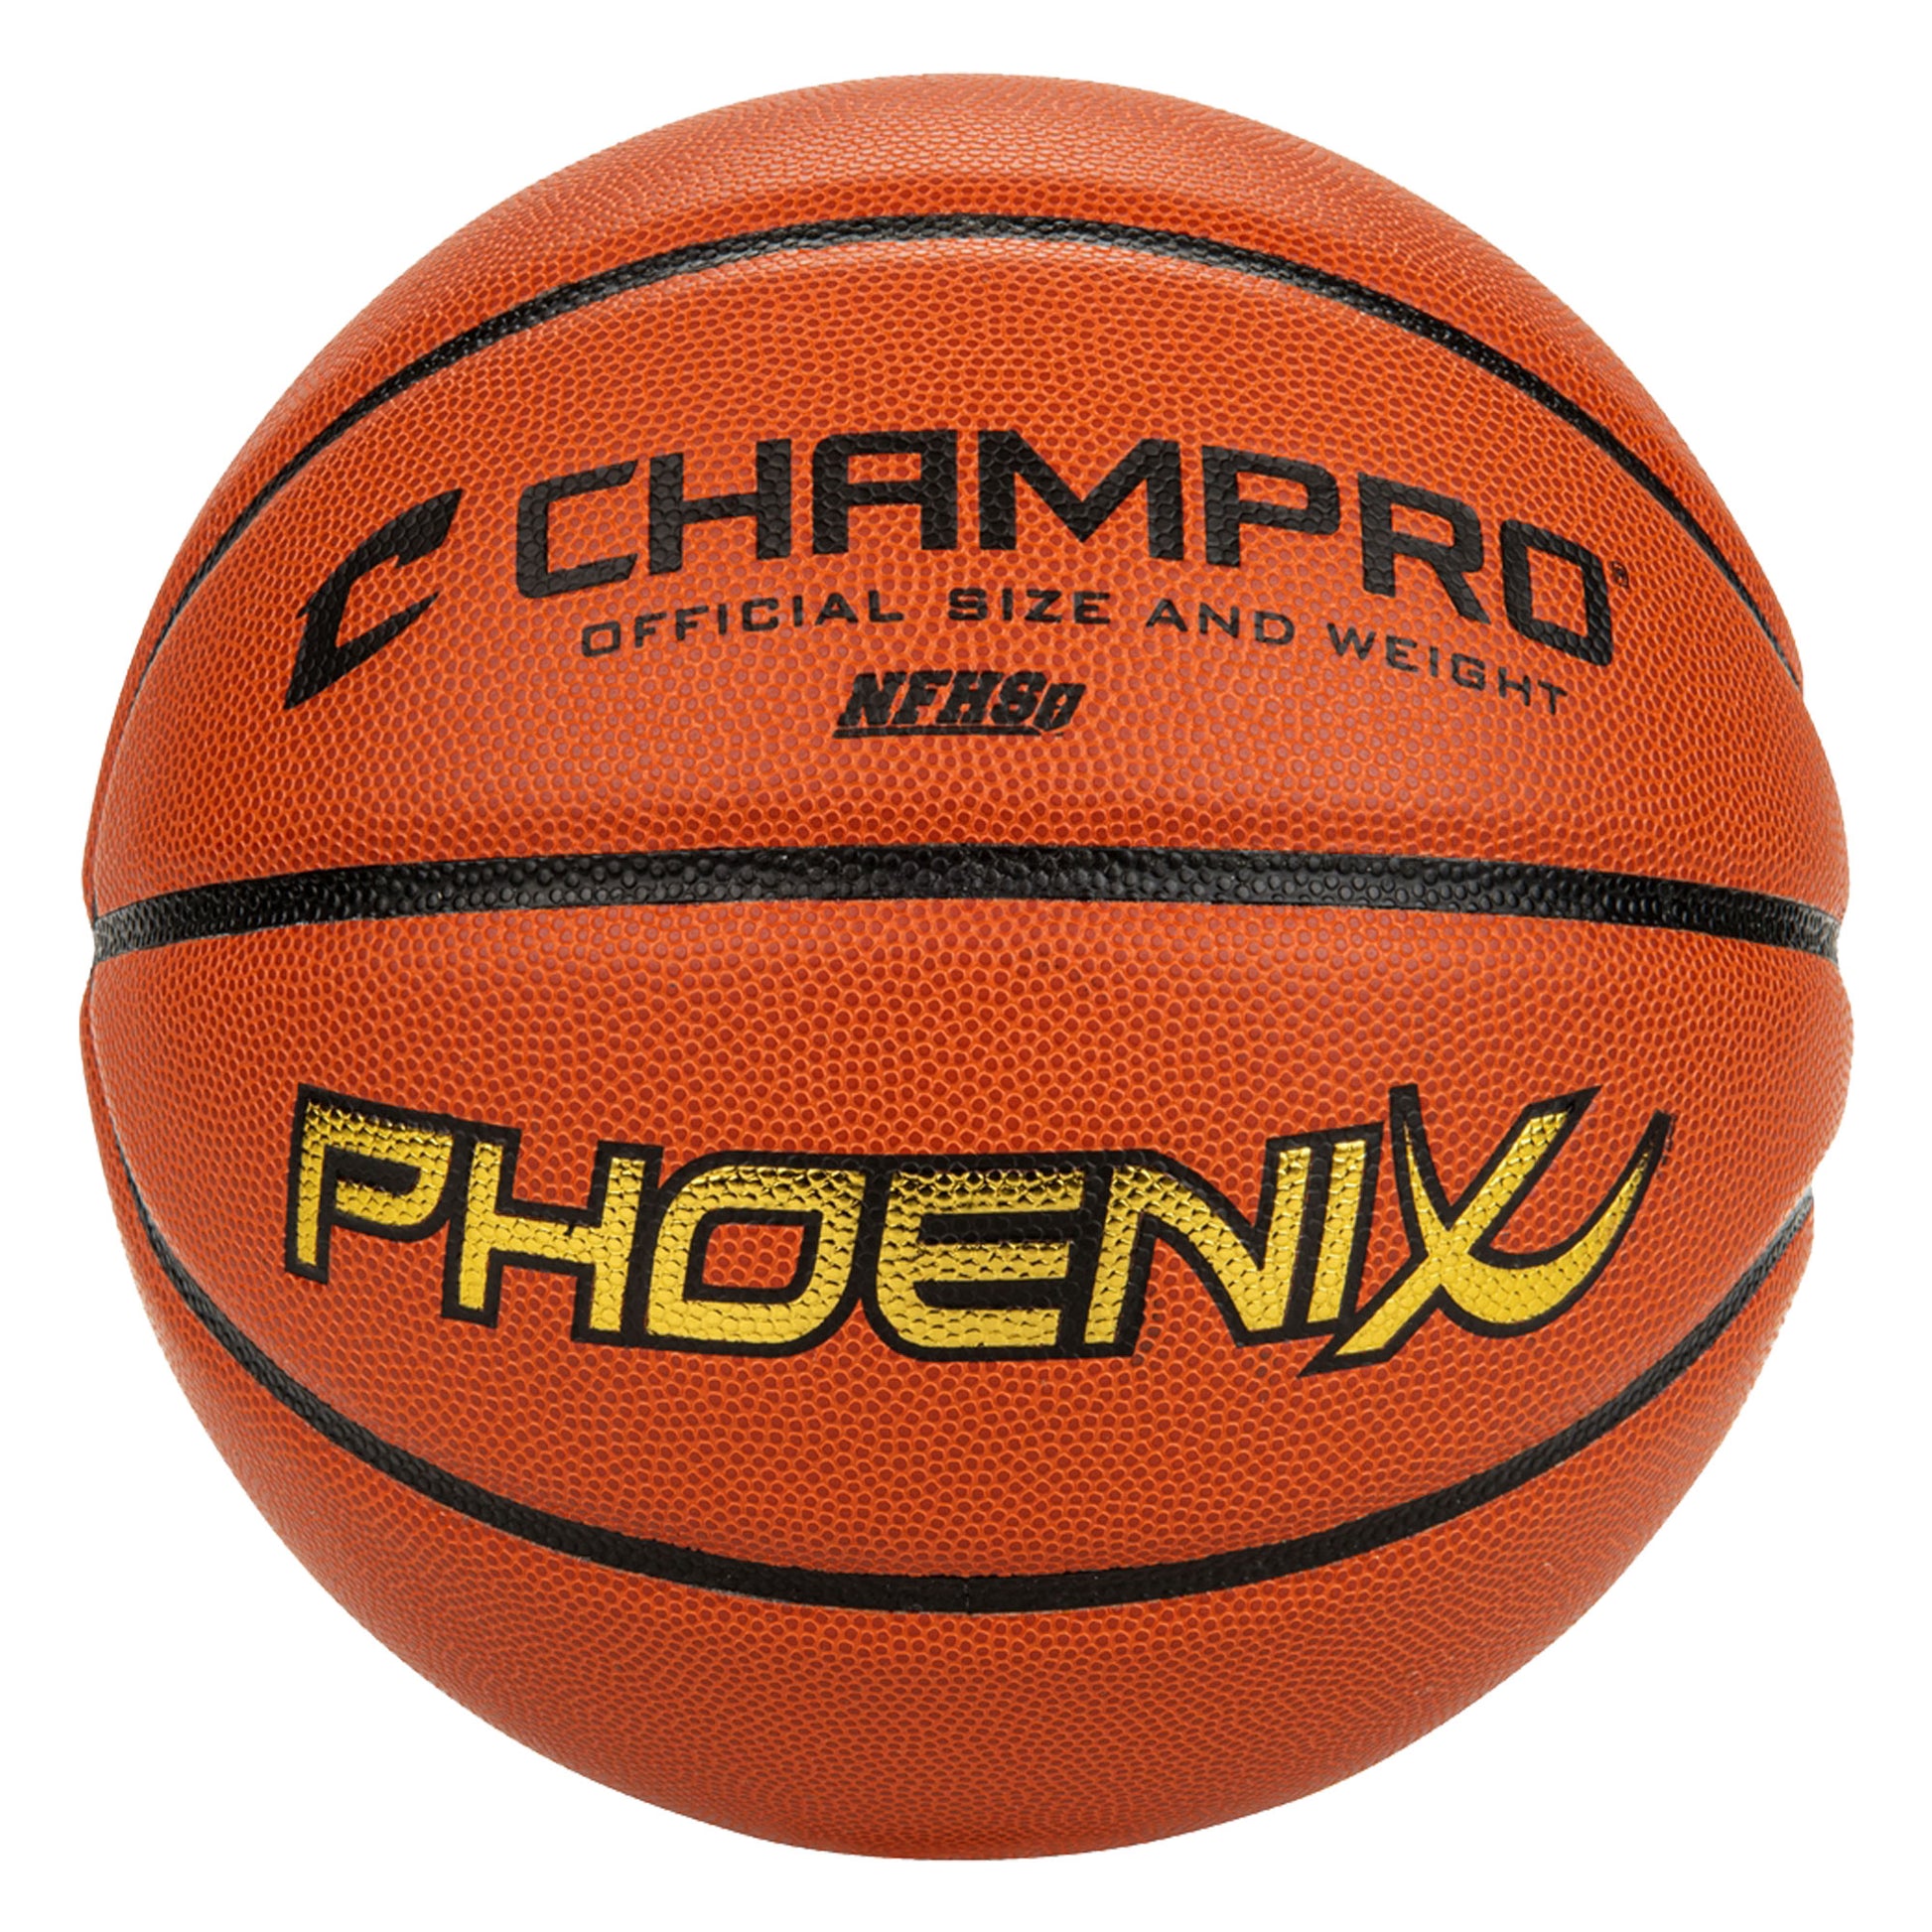 Champro Sports Phoenix Microfiber Indoor Basketball – Red's Team